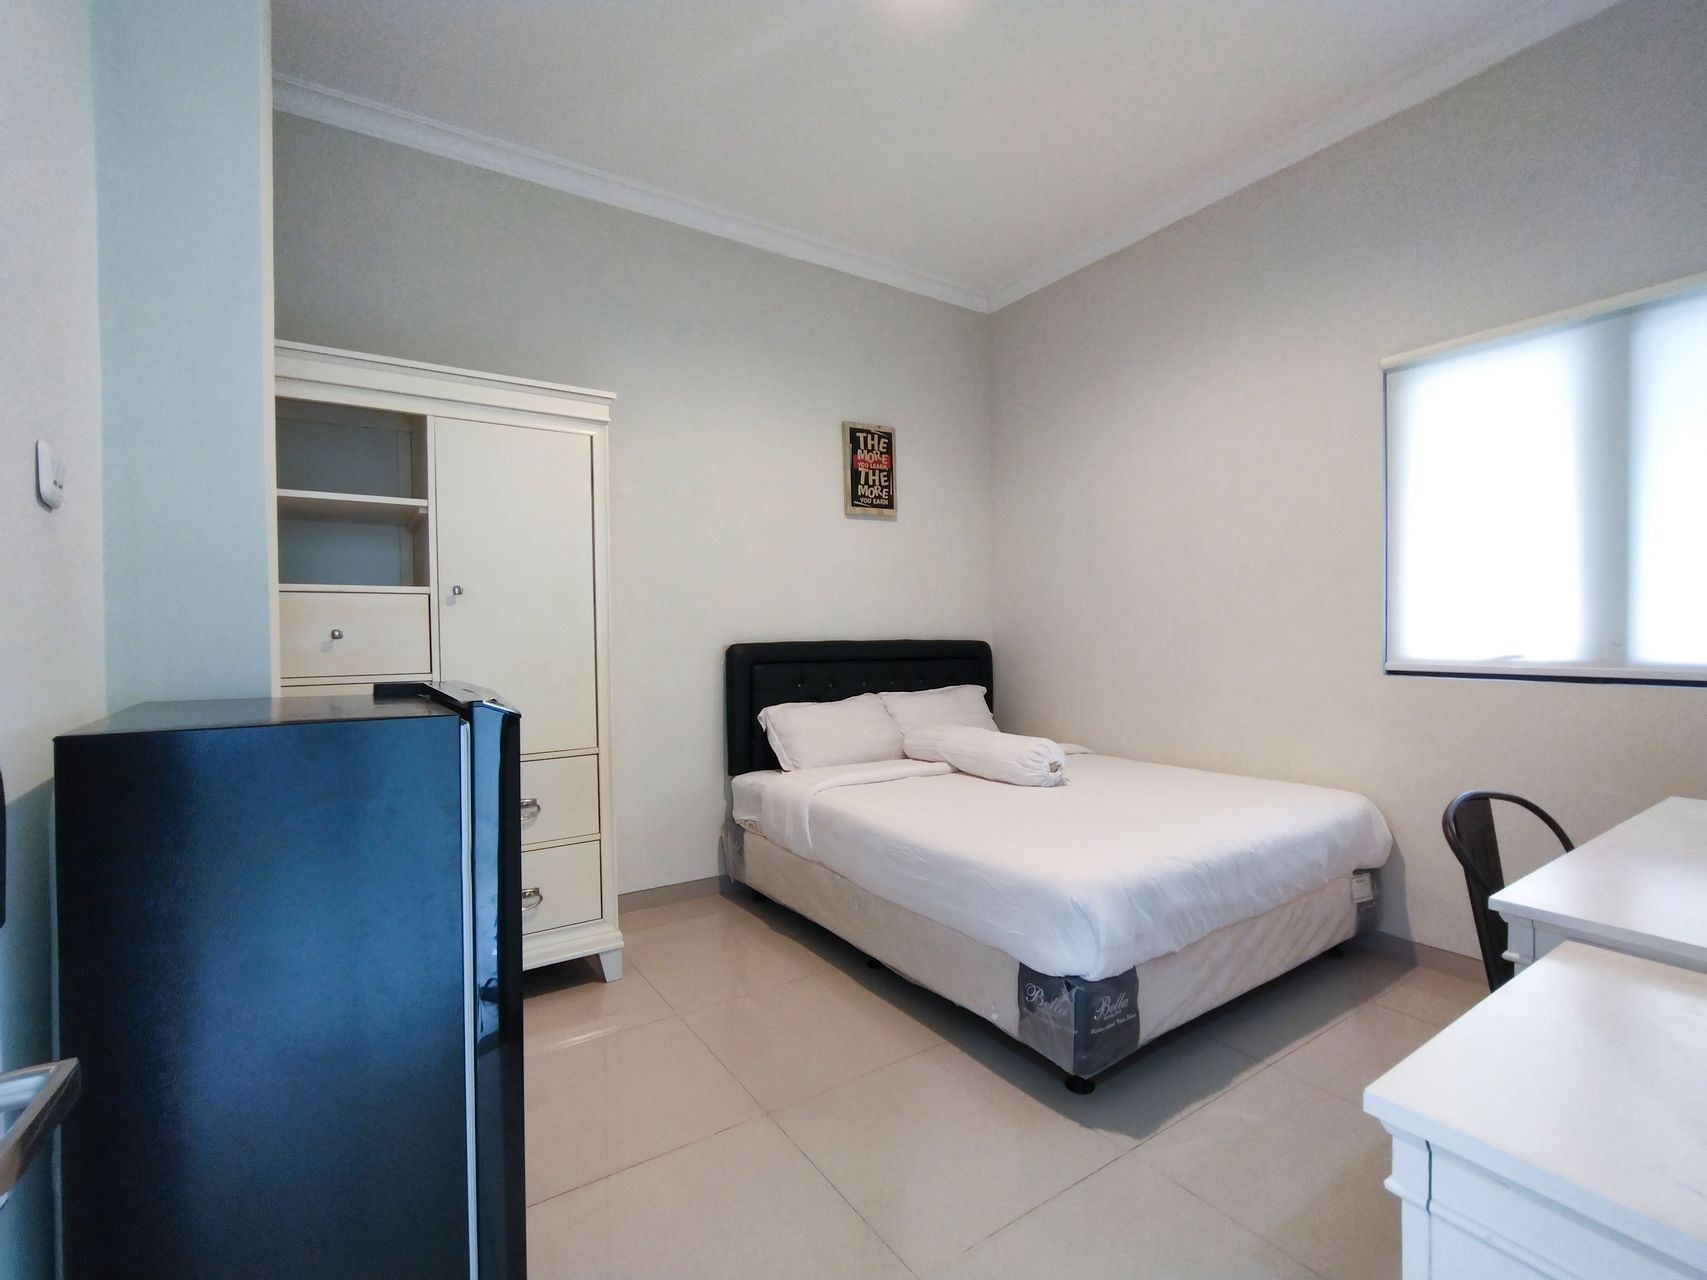 Bedroom 2, Djuragan Kamar Bandahara, Malang